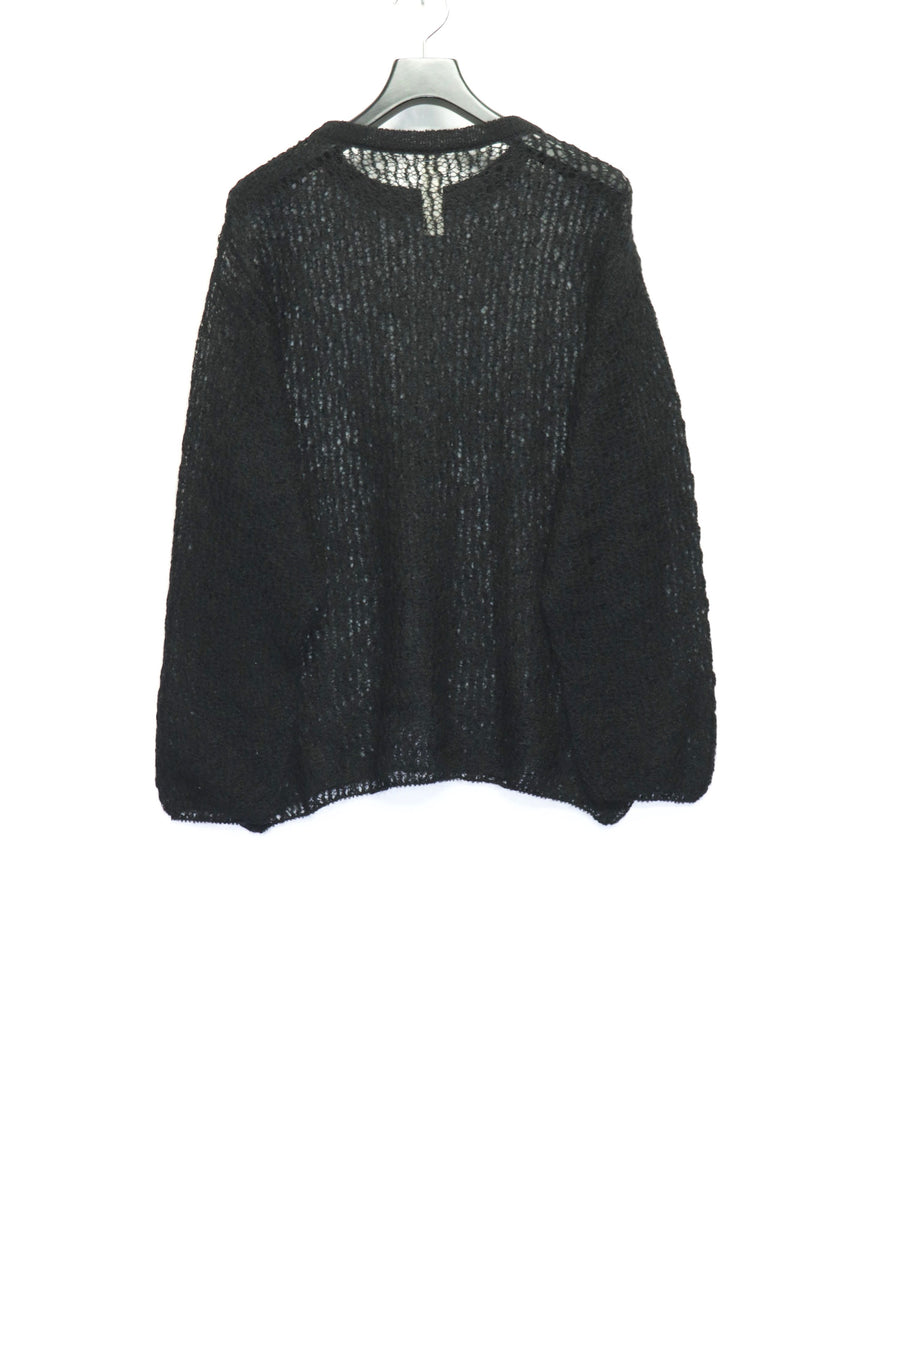 SHINYAKOZUKA's Lace in Progress Black (Knit) Mail Order | Palette